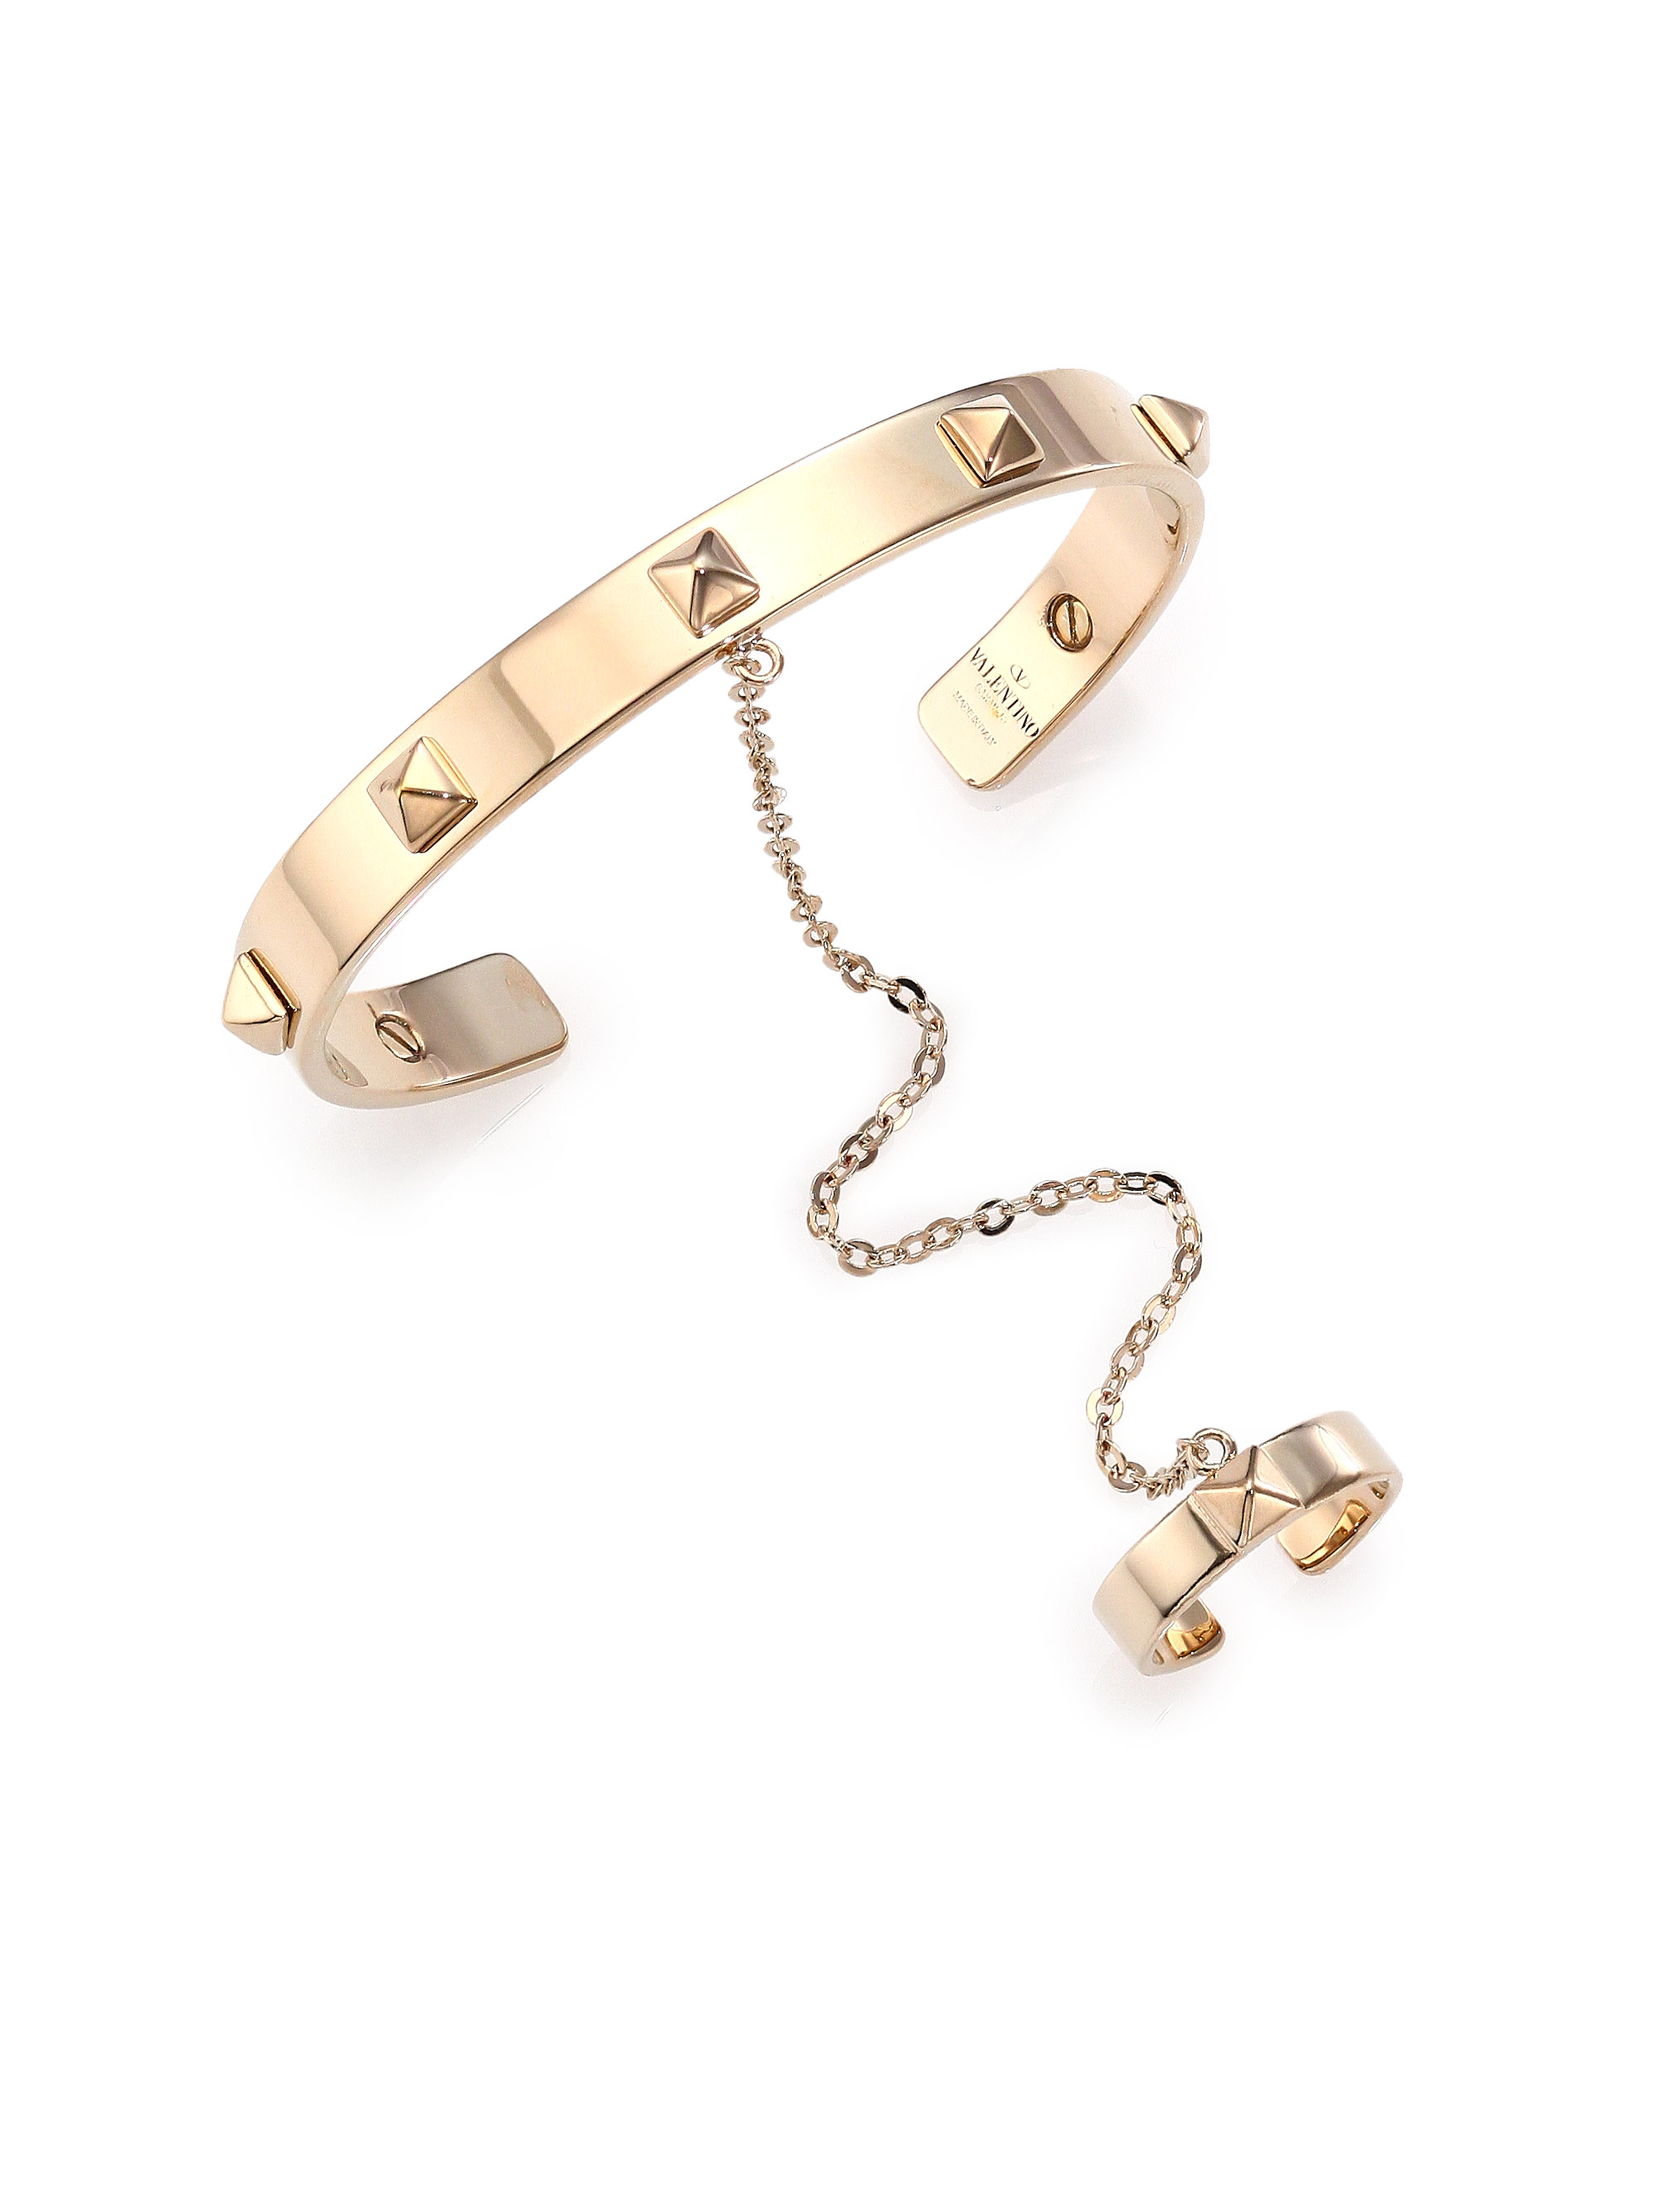 Lyst - Valentino Rockstud Chained Cuff Bracelet & Ring Set in Metallic